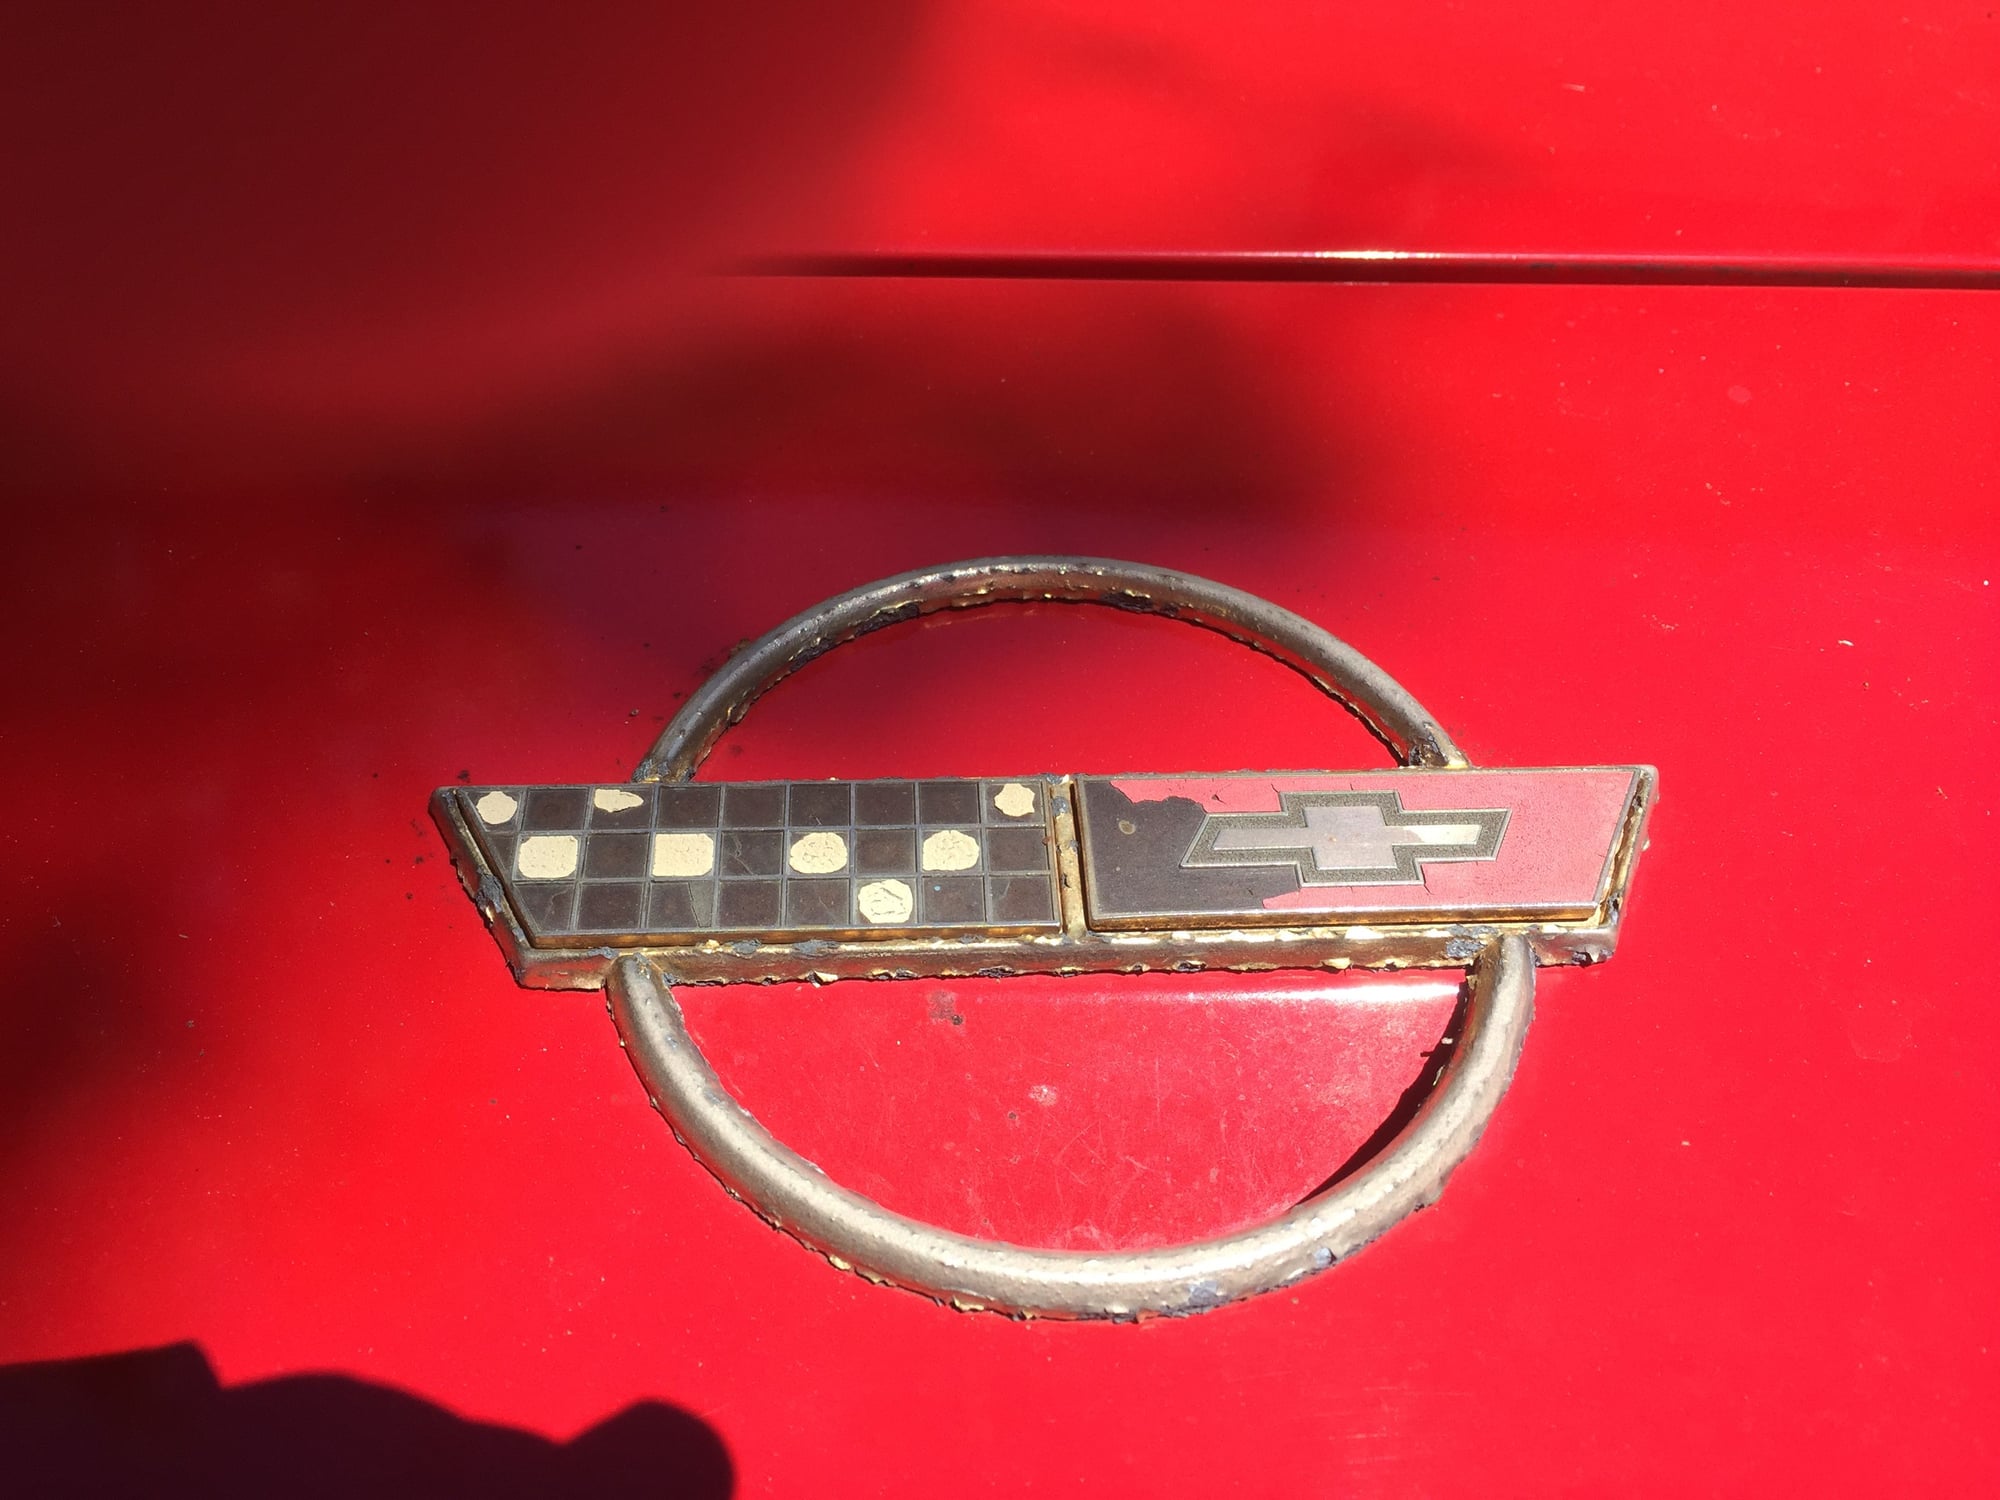  C4 Corvette Front Nose Emblem + Gas Fuel Lid Emblem